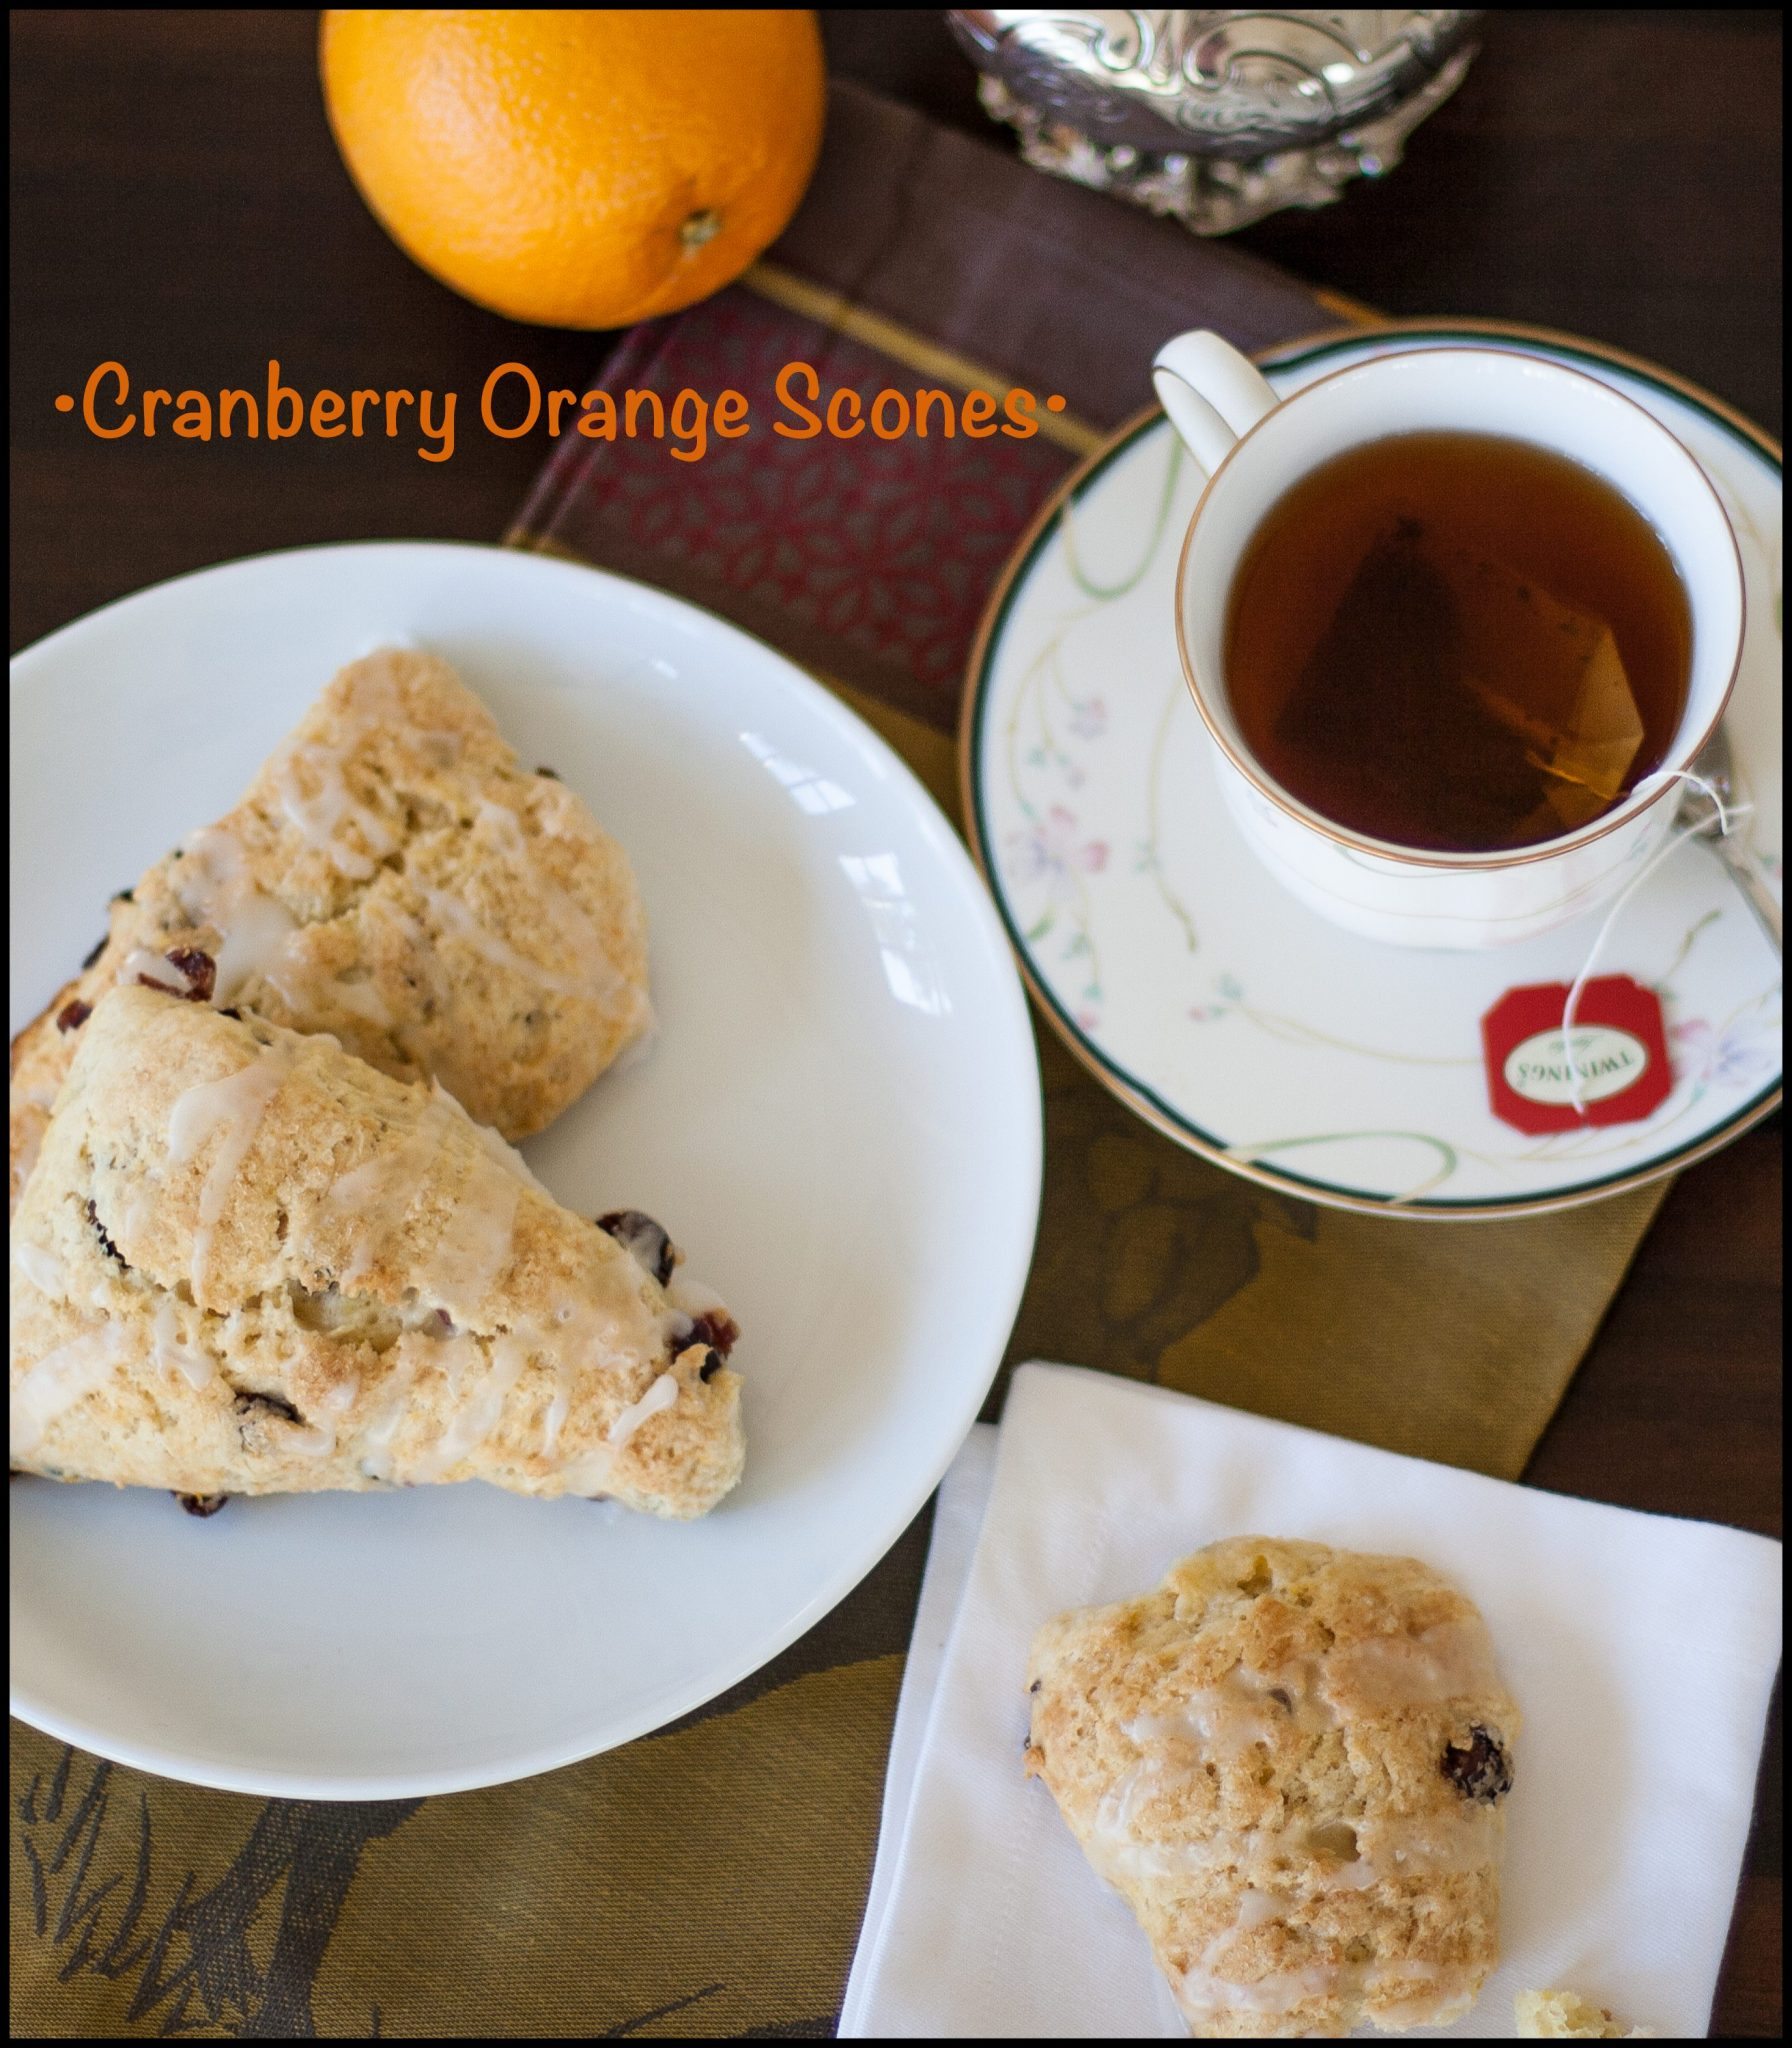 Cranberry orange scones with a cup of tea. 